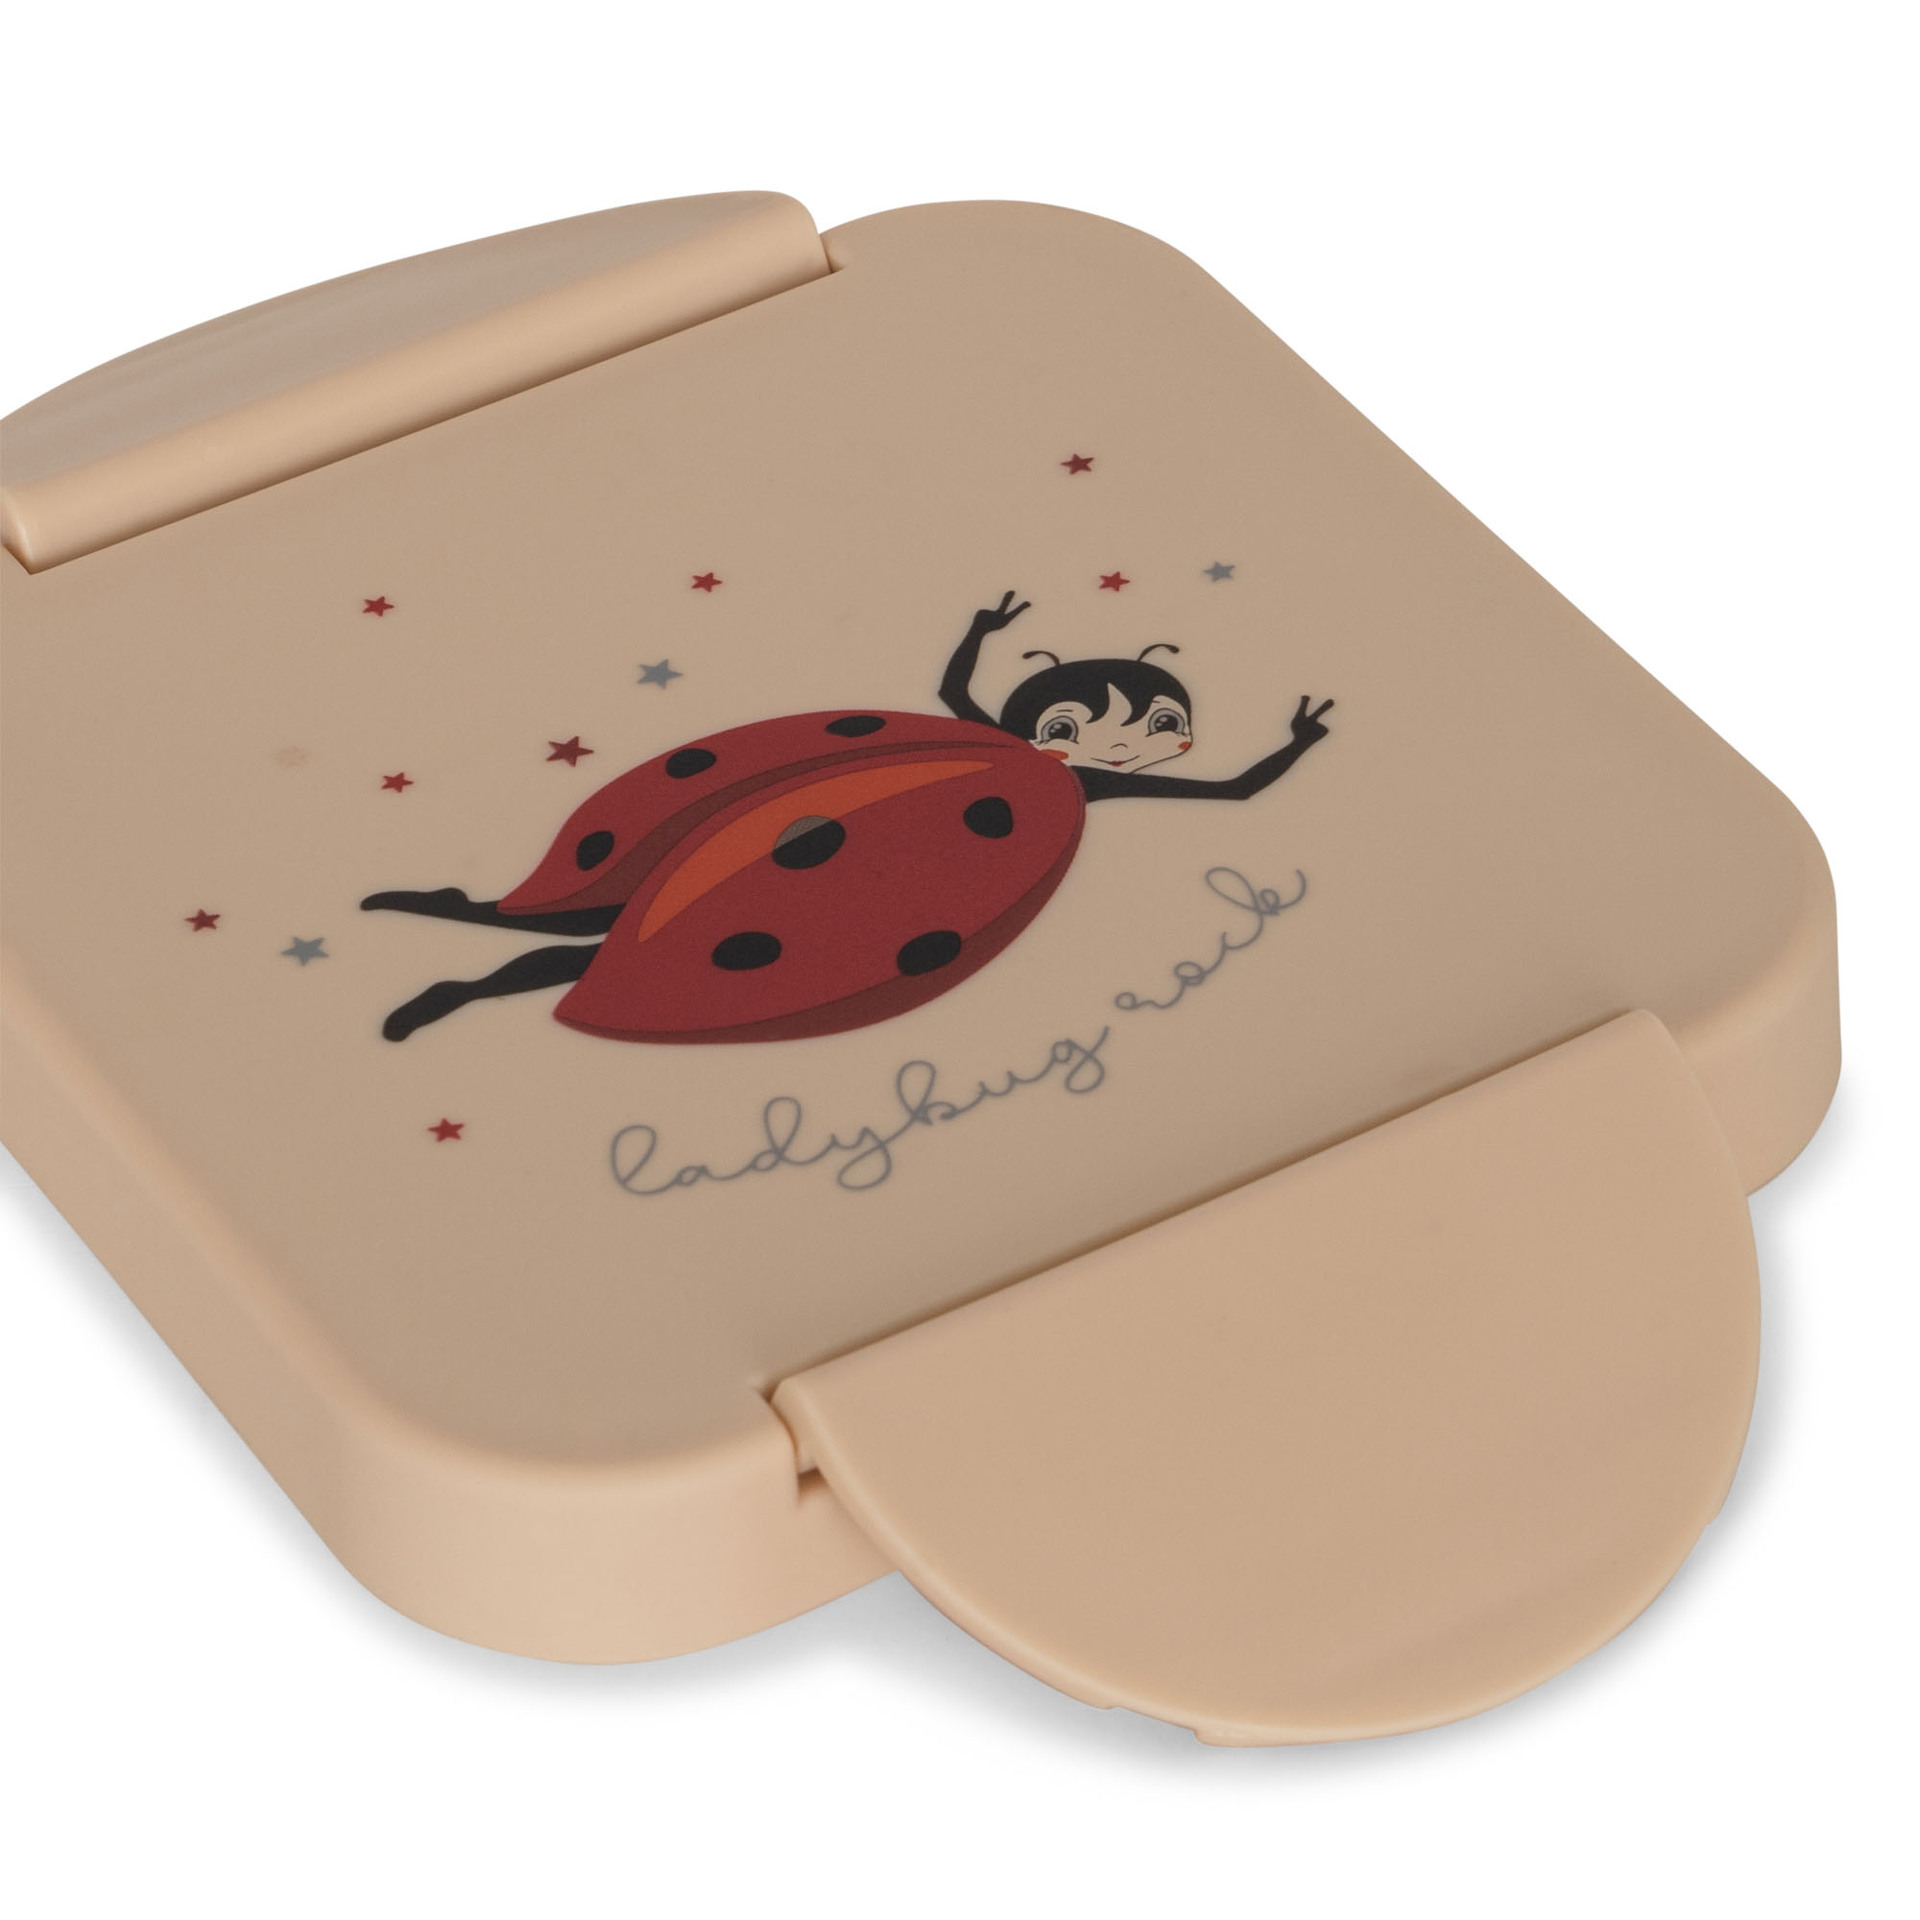 Lunch Box small Ladybug 2